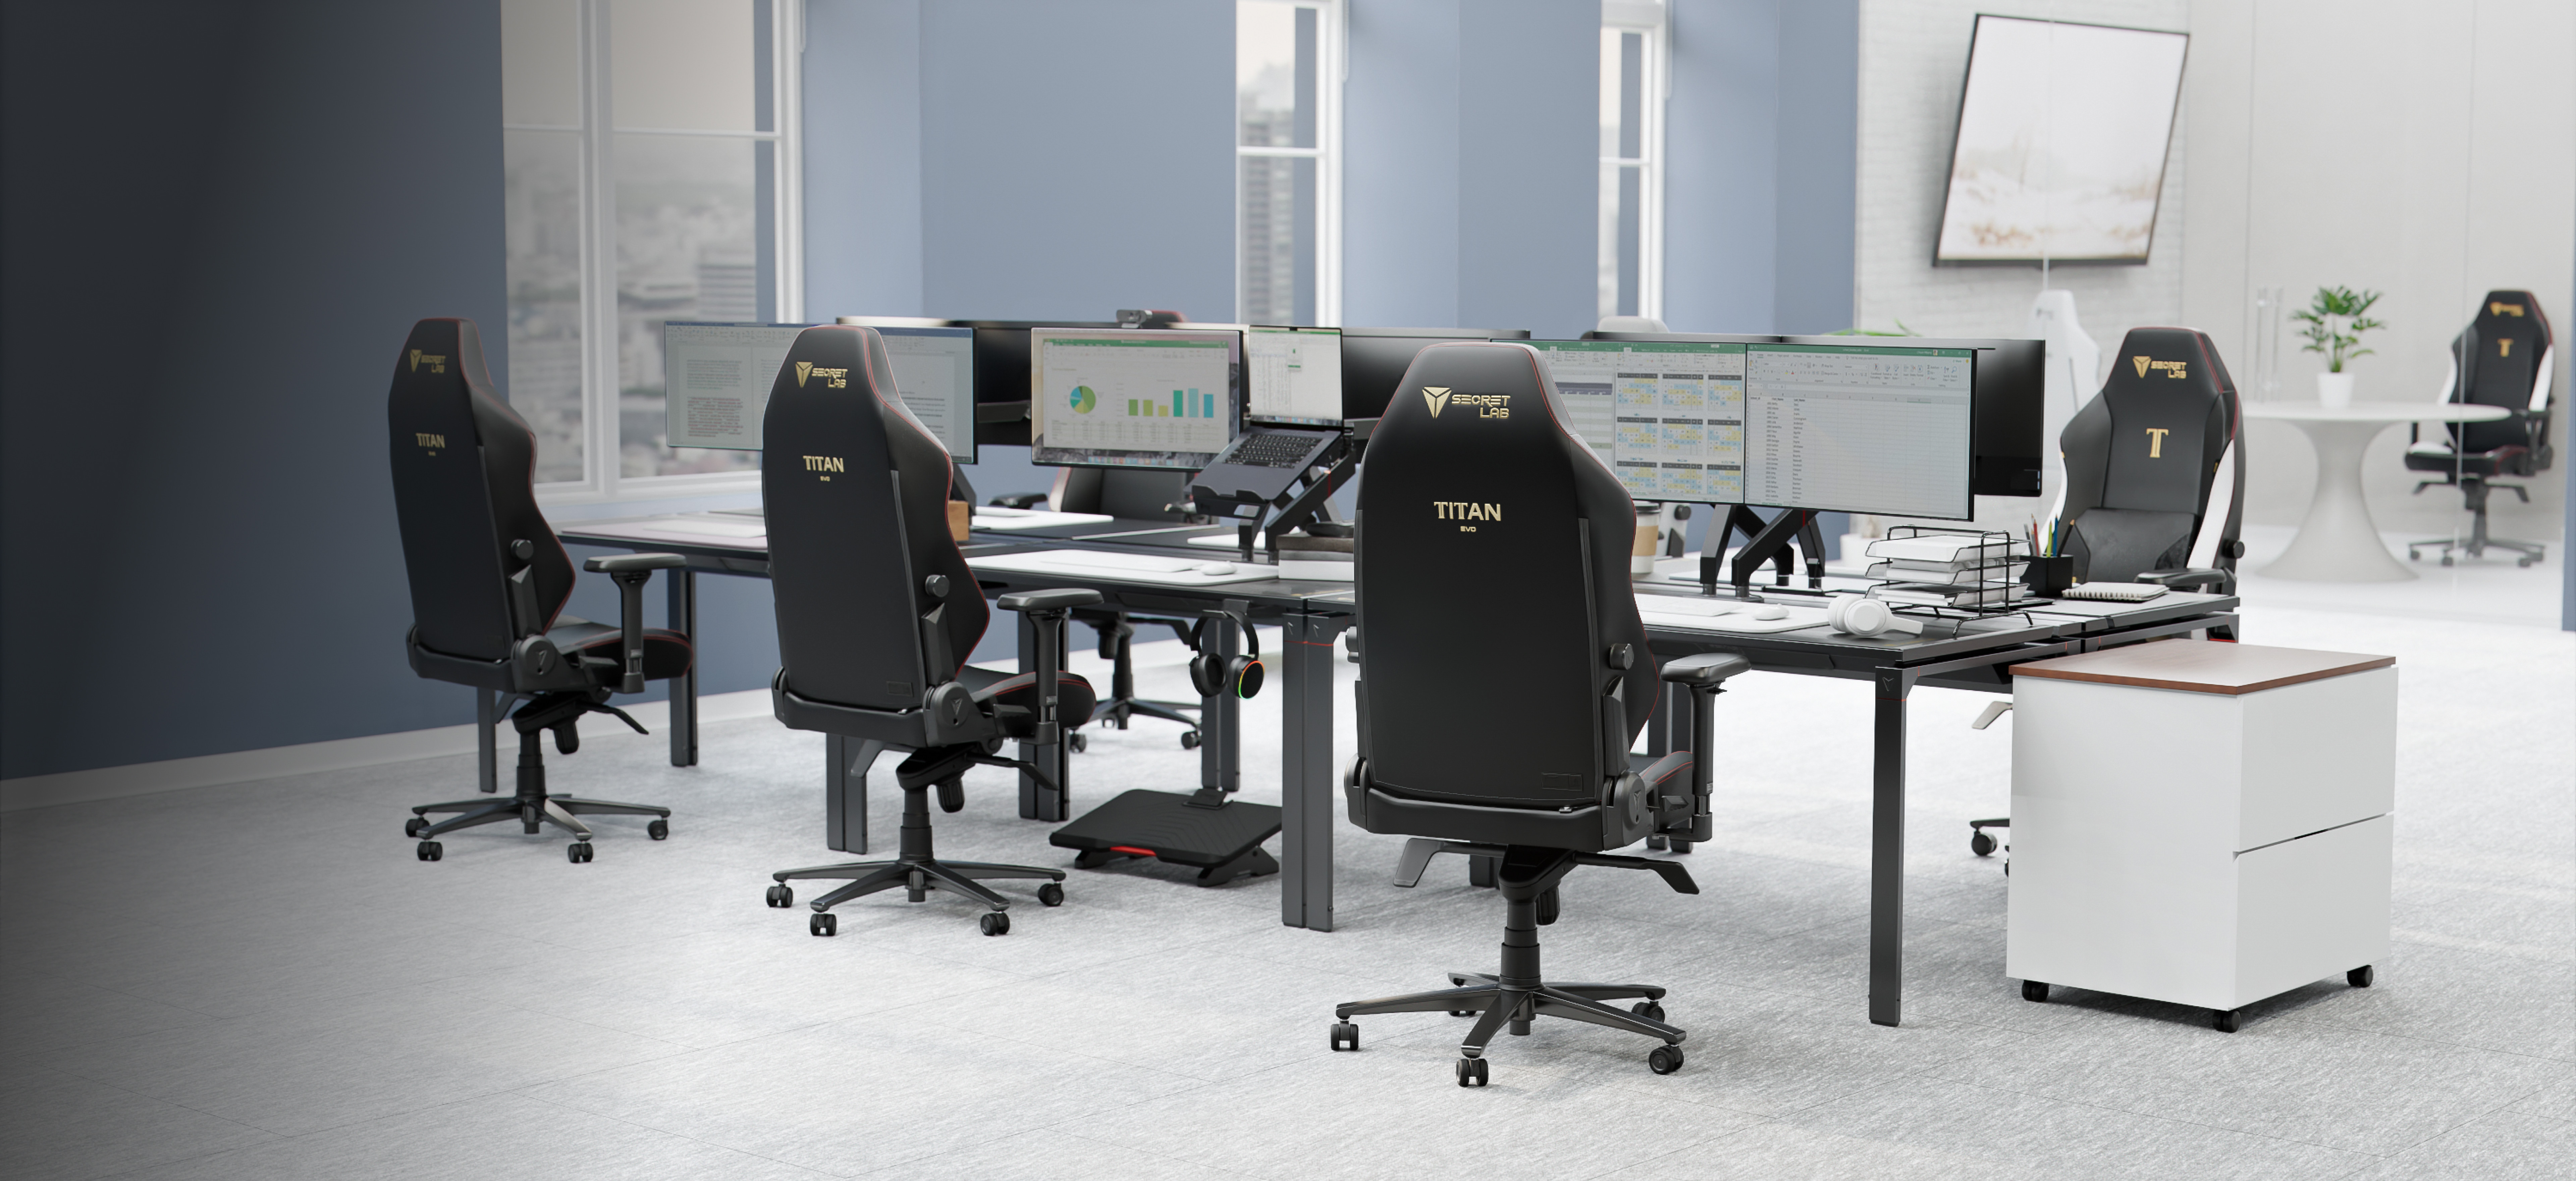 Open office workspace environment featuring Secretlab TITAN Evo chairs and Secretlab MAGNUS Metal desks